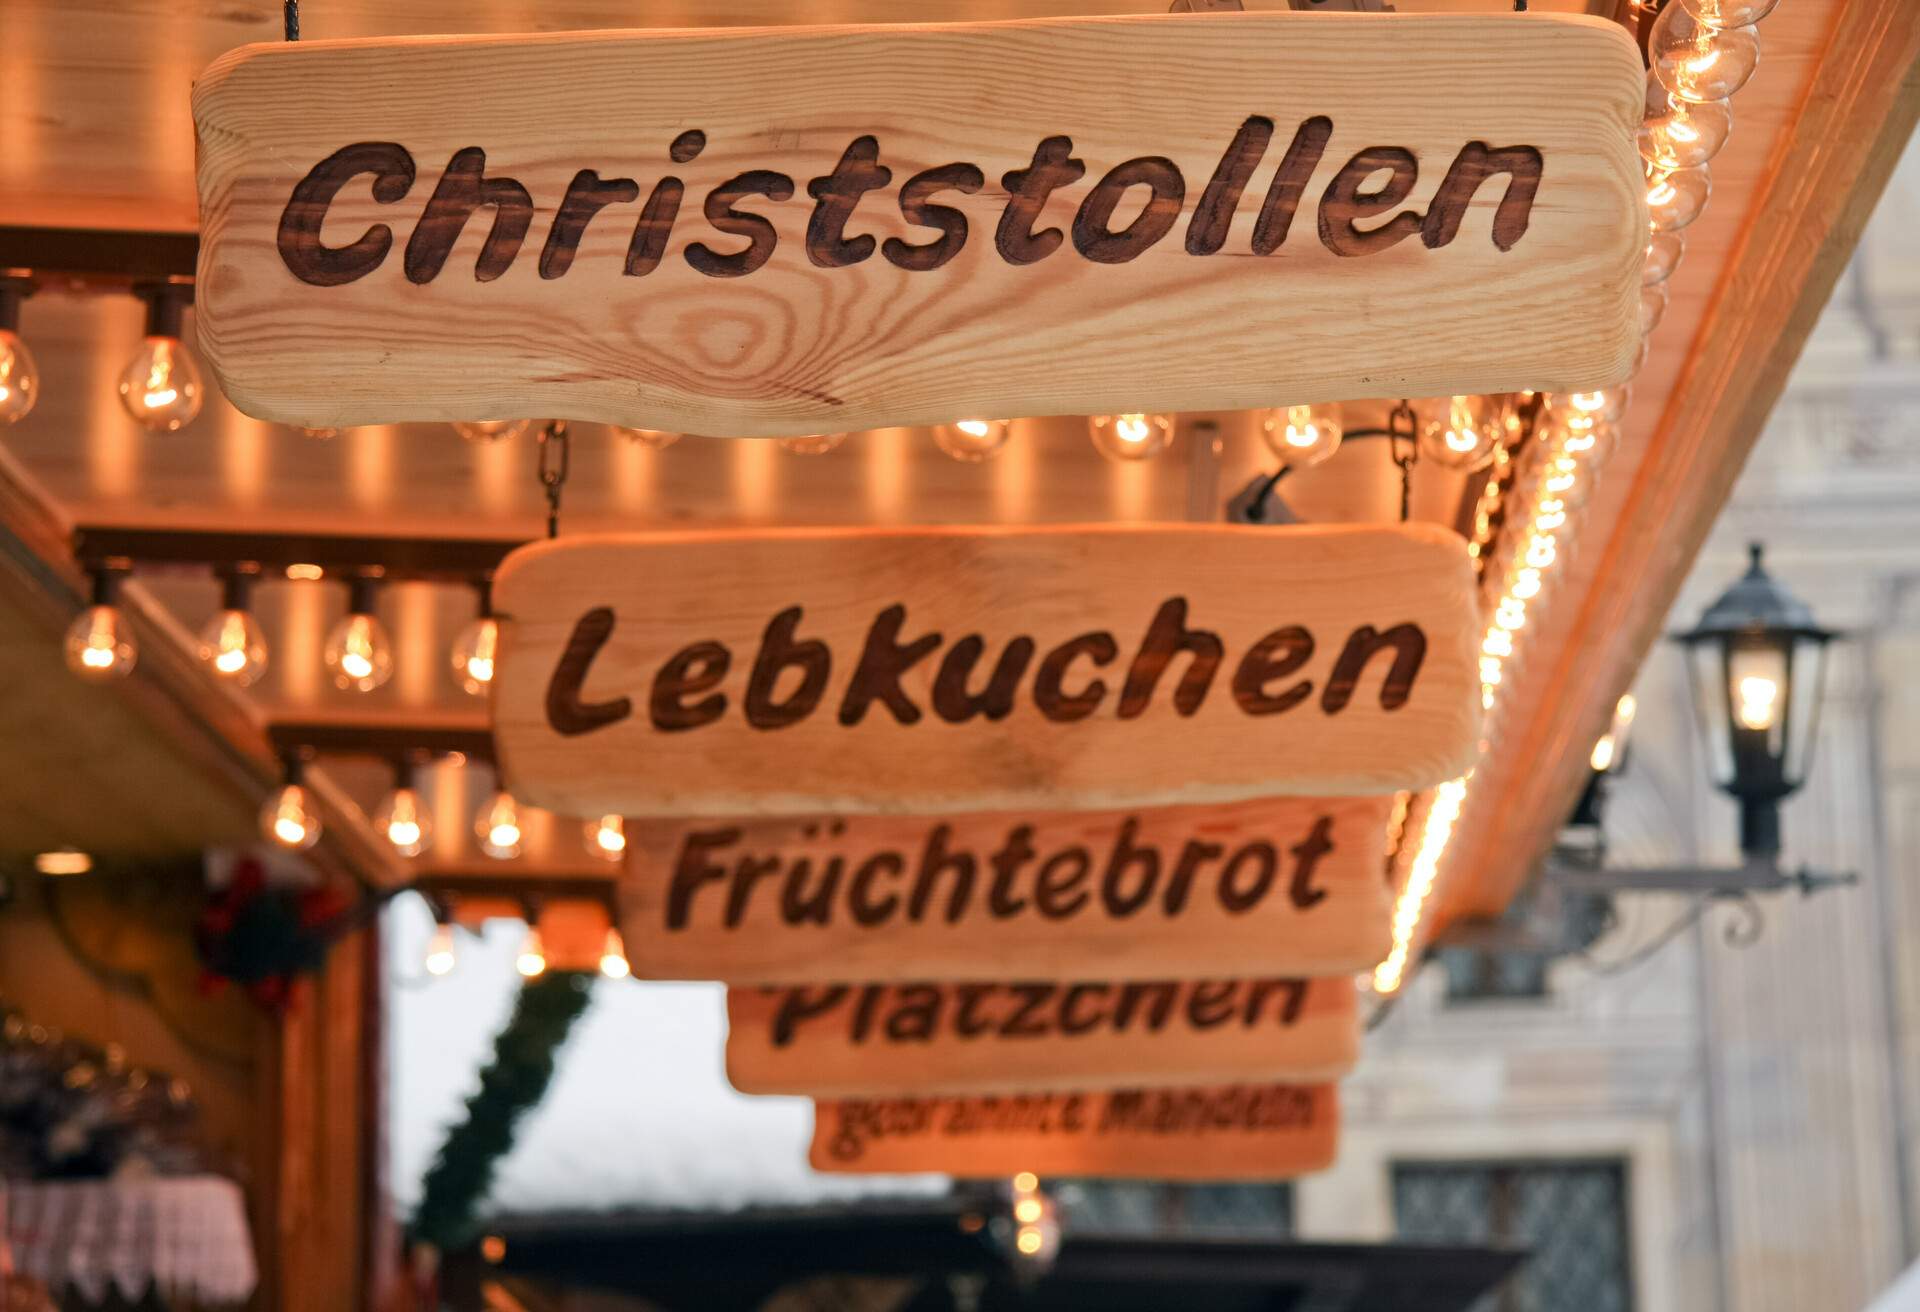 Christmas market sign, Munich, Germany